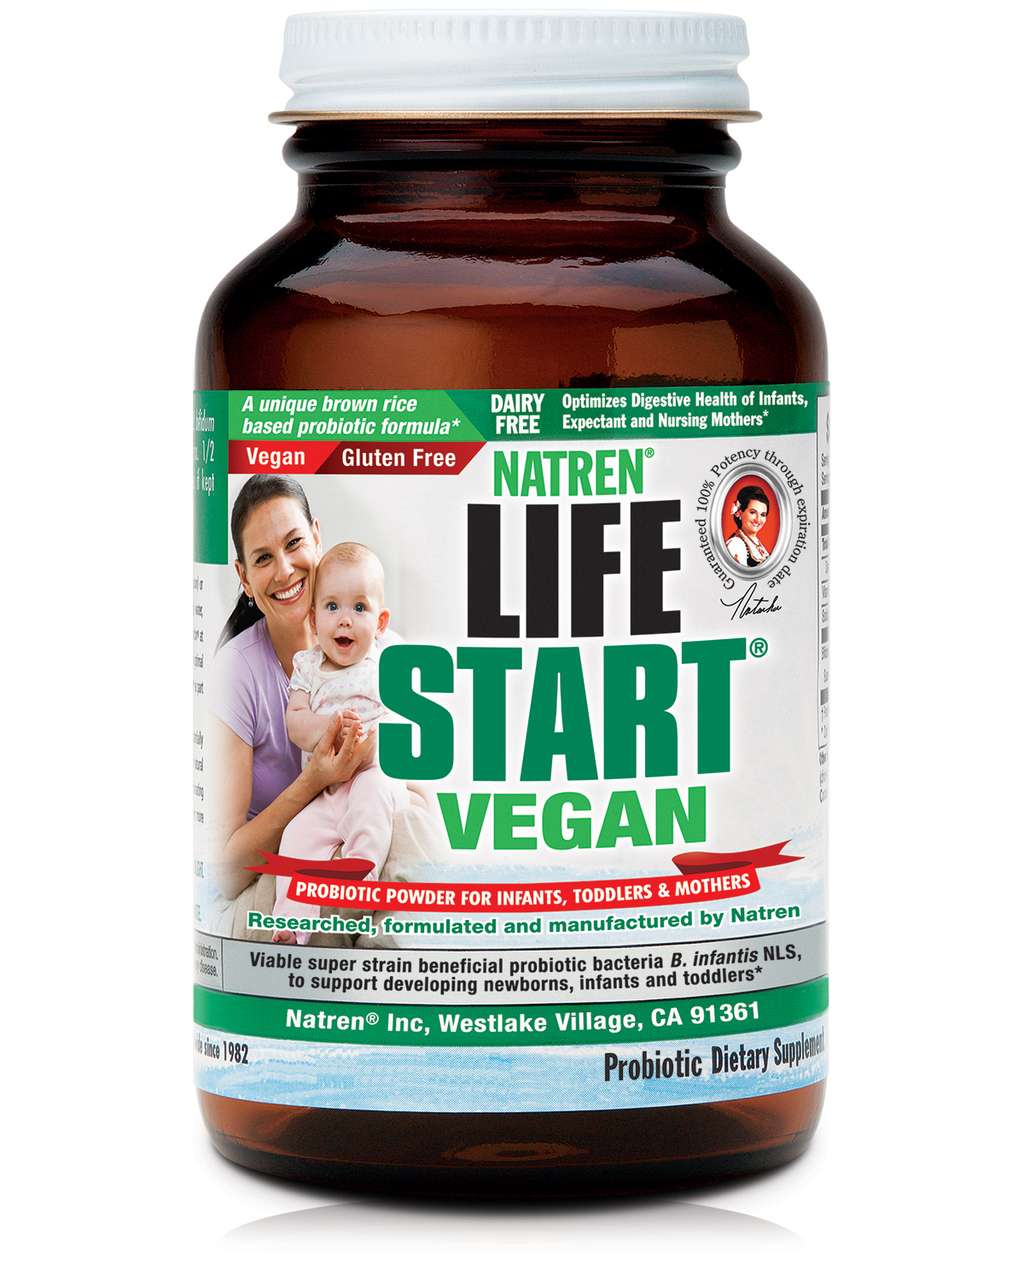 Natren Life Start Vegan Powder Probiotic for Infants